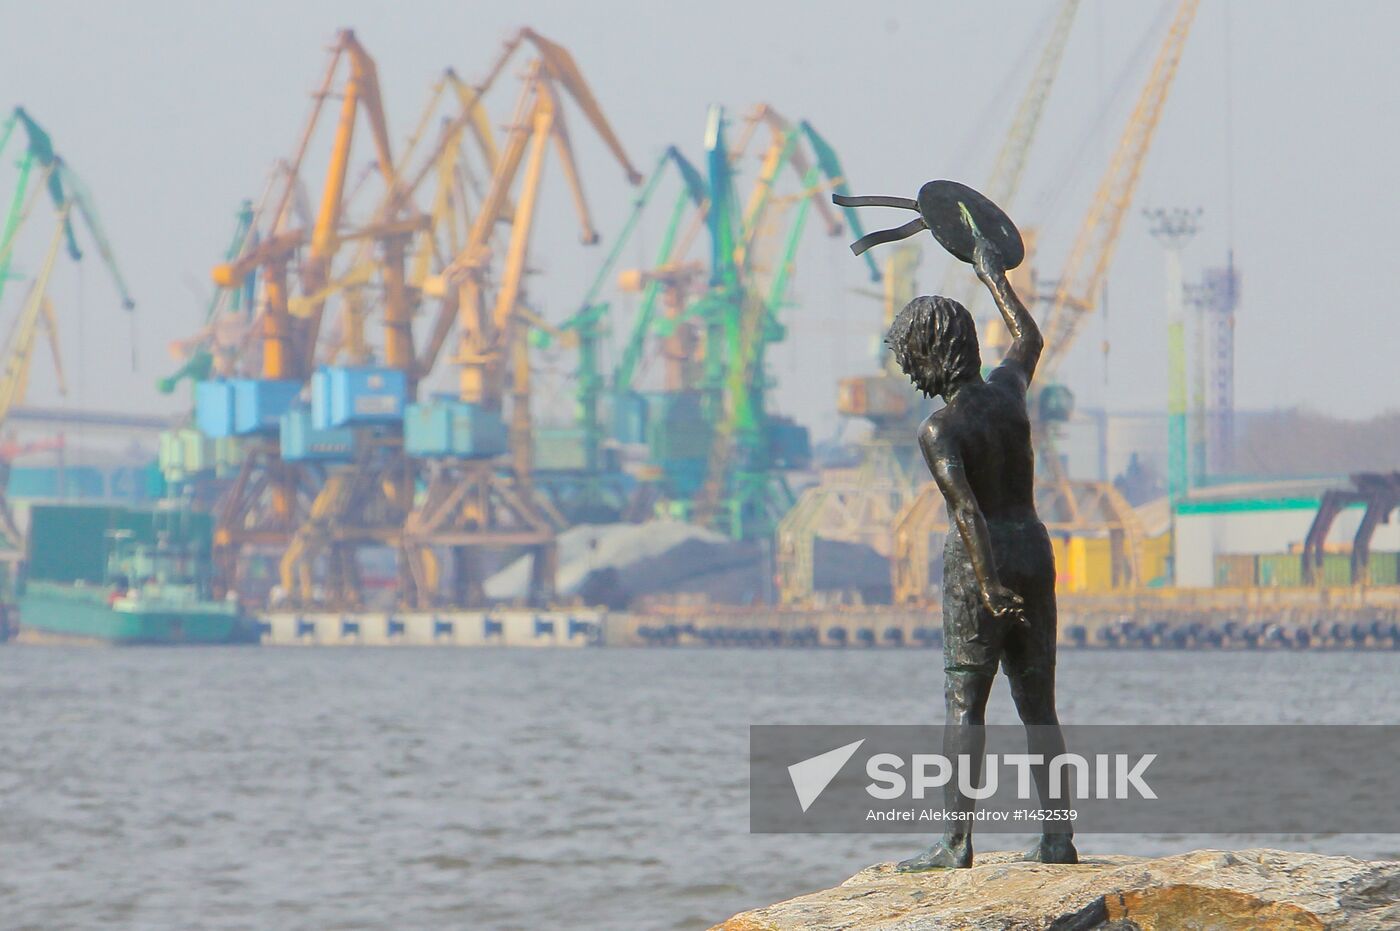 Klaipeda Seaport